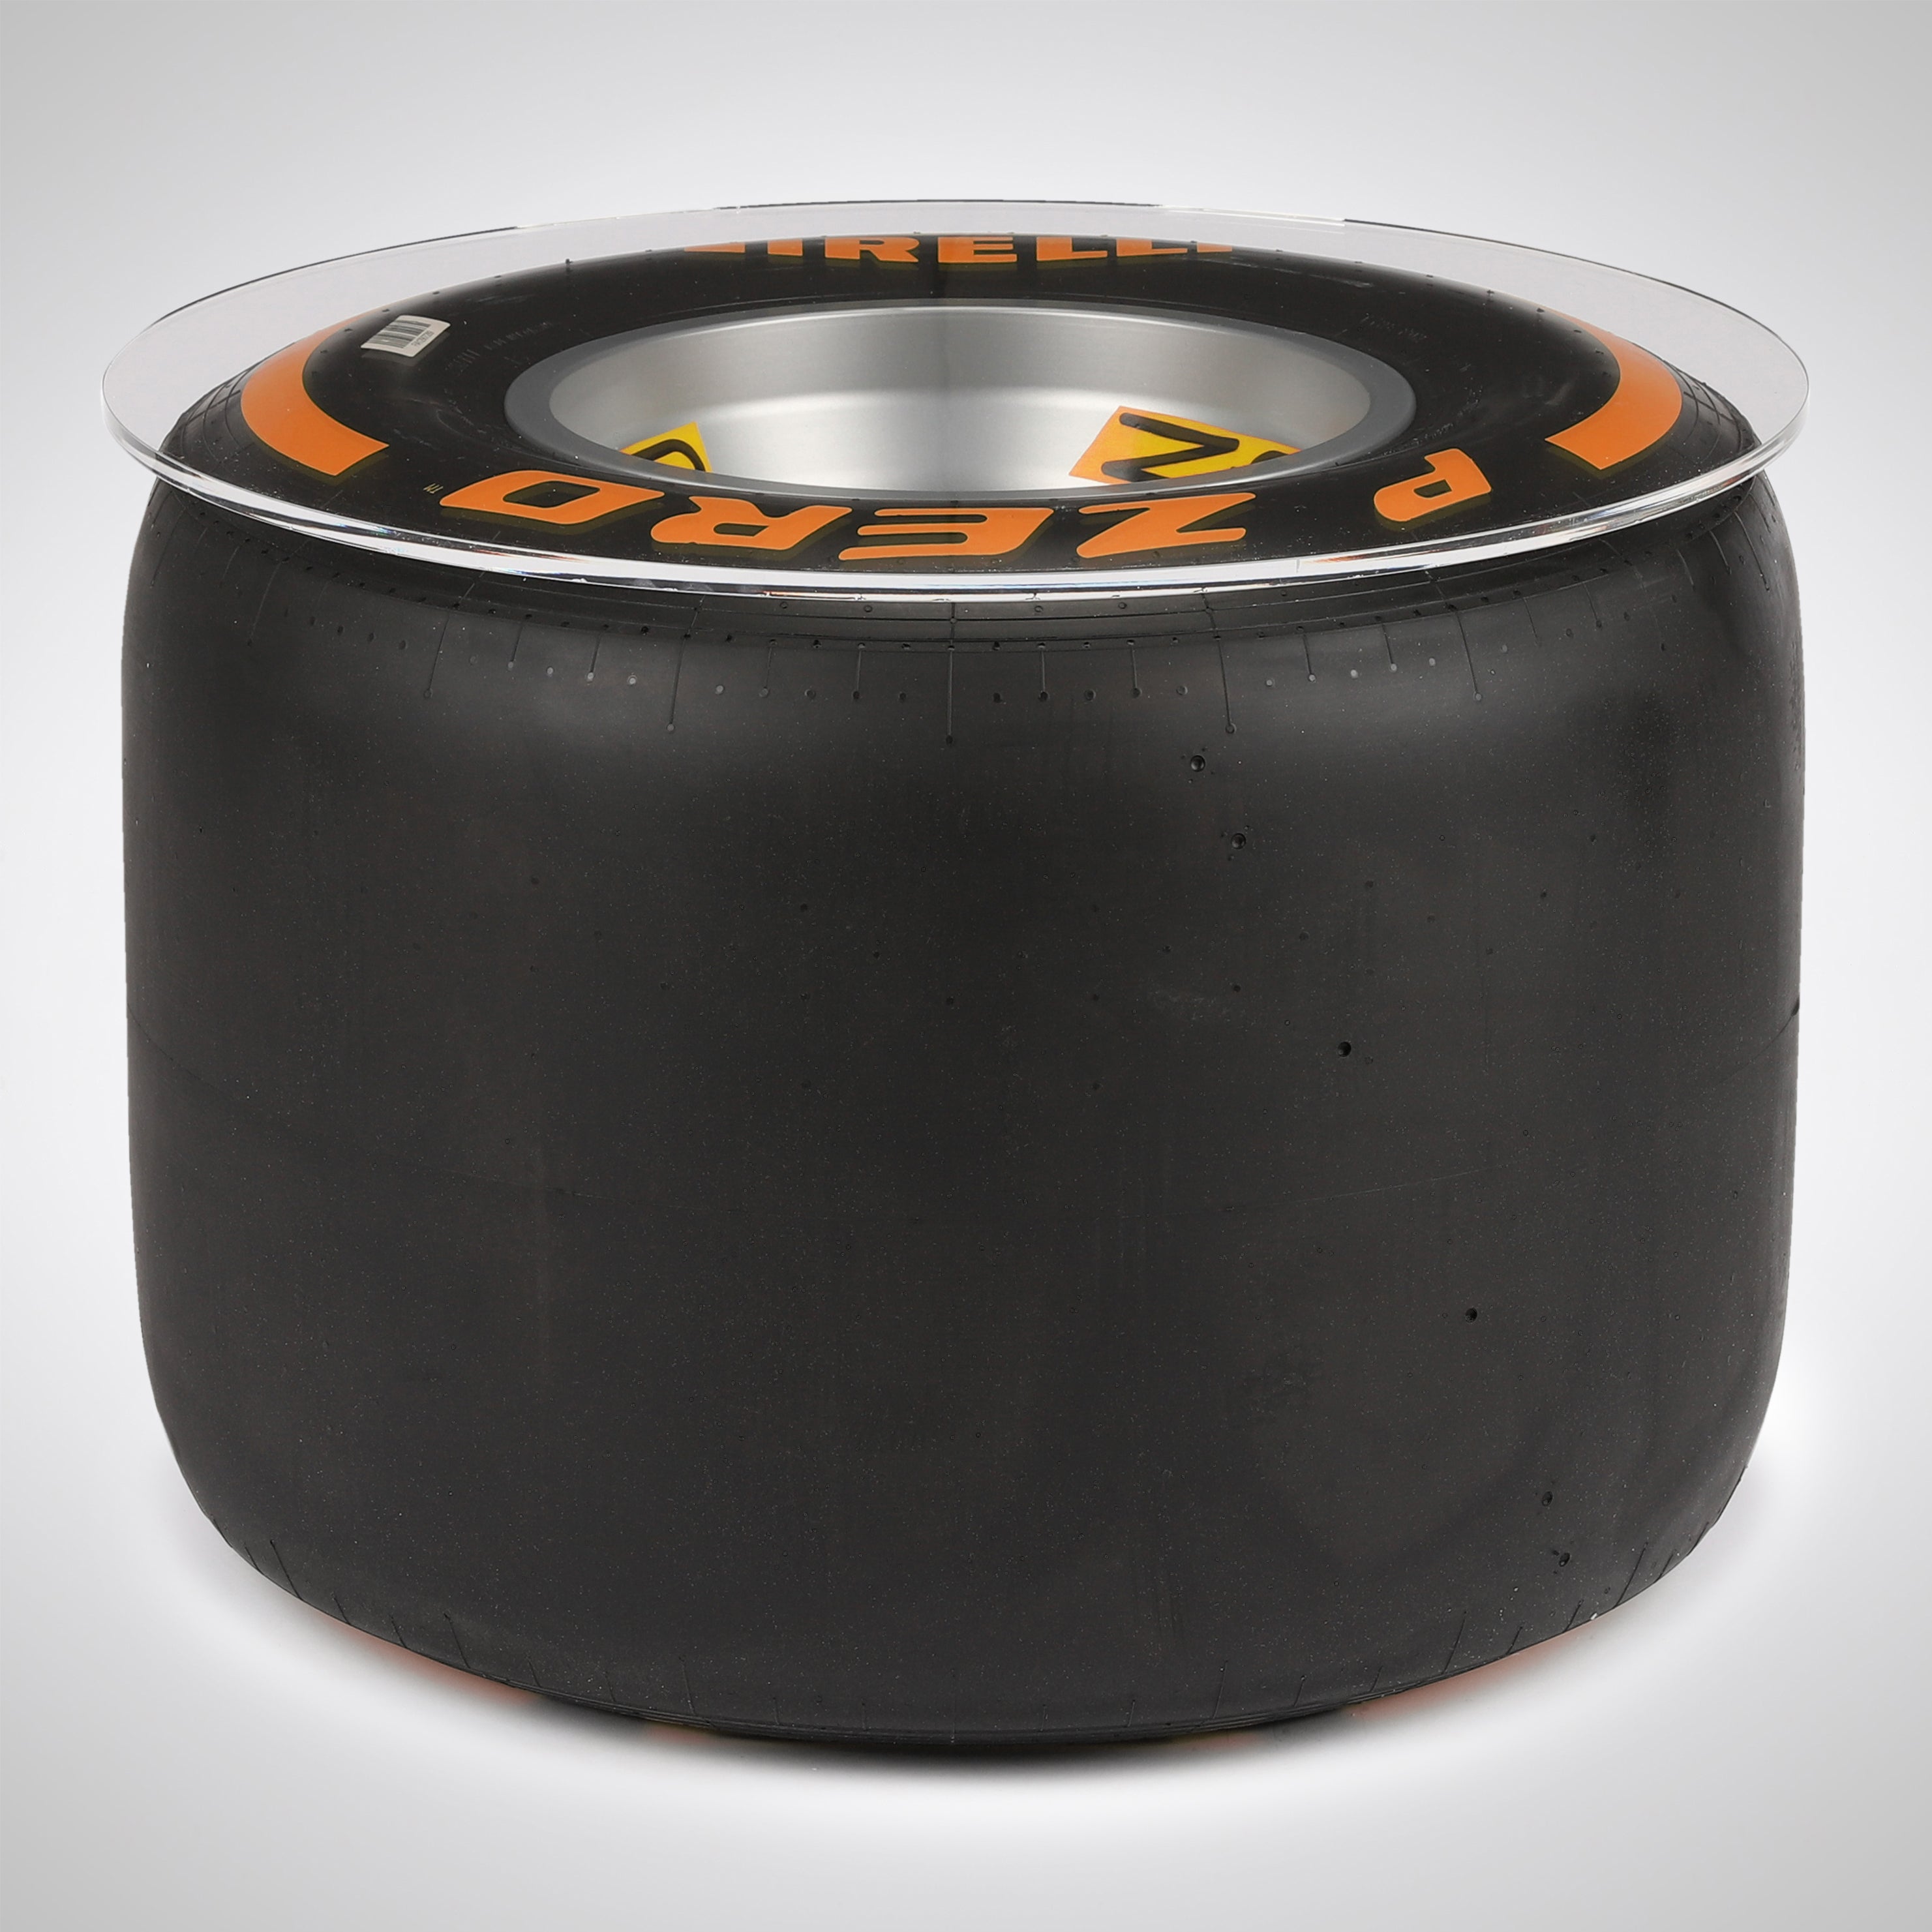 Pirelli 2018 Wheel Rim & Tyre Table - Orange Superhard Compound